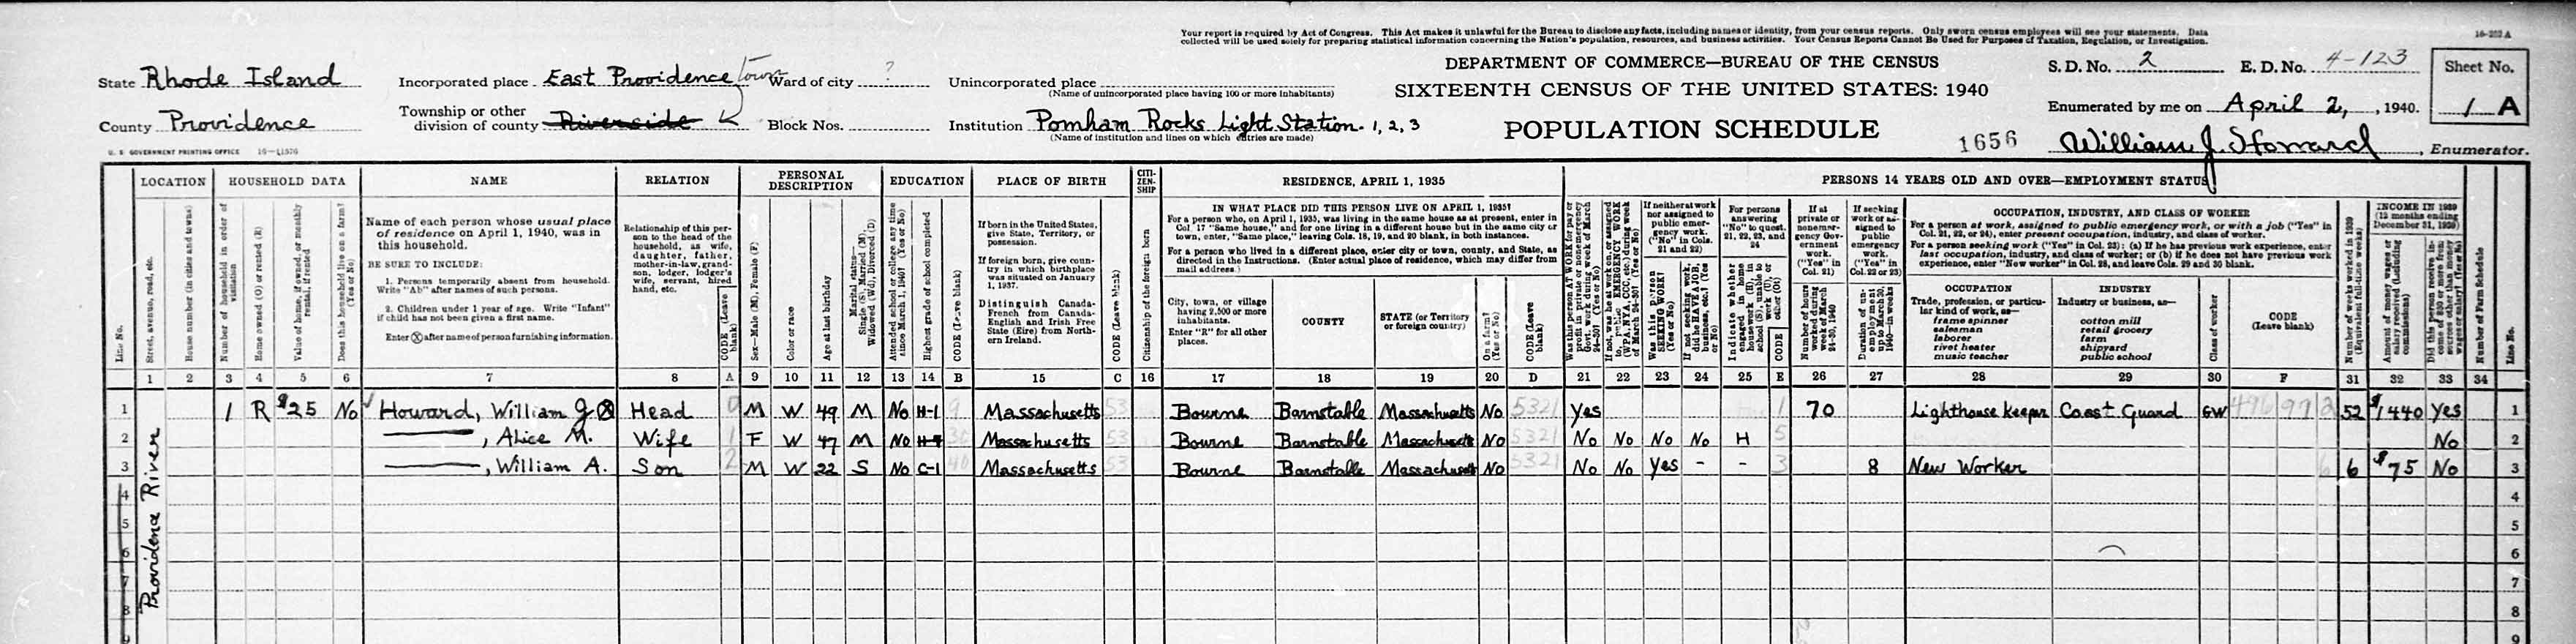 Pomham Rock Lighthouse 1940 Census